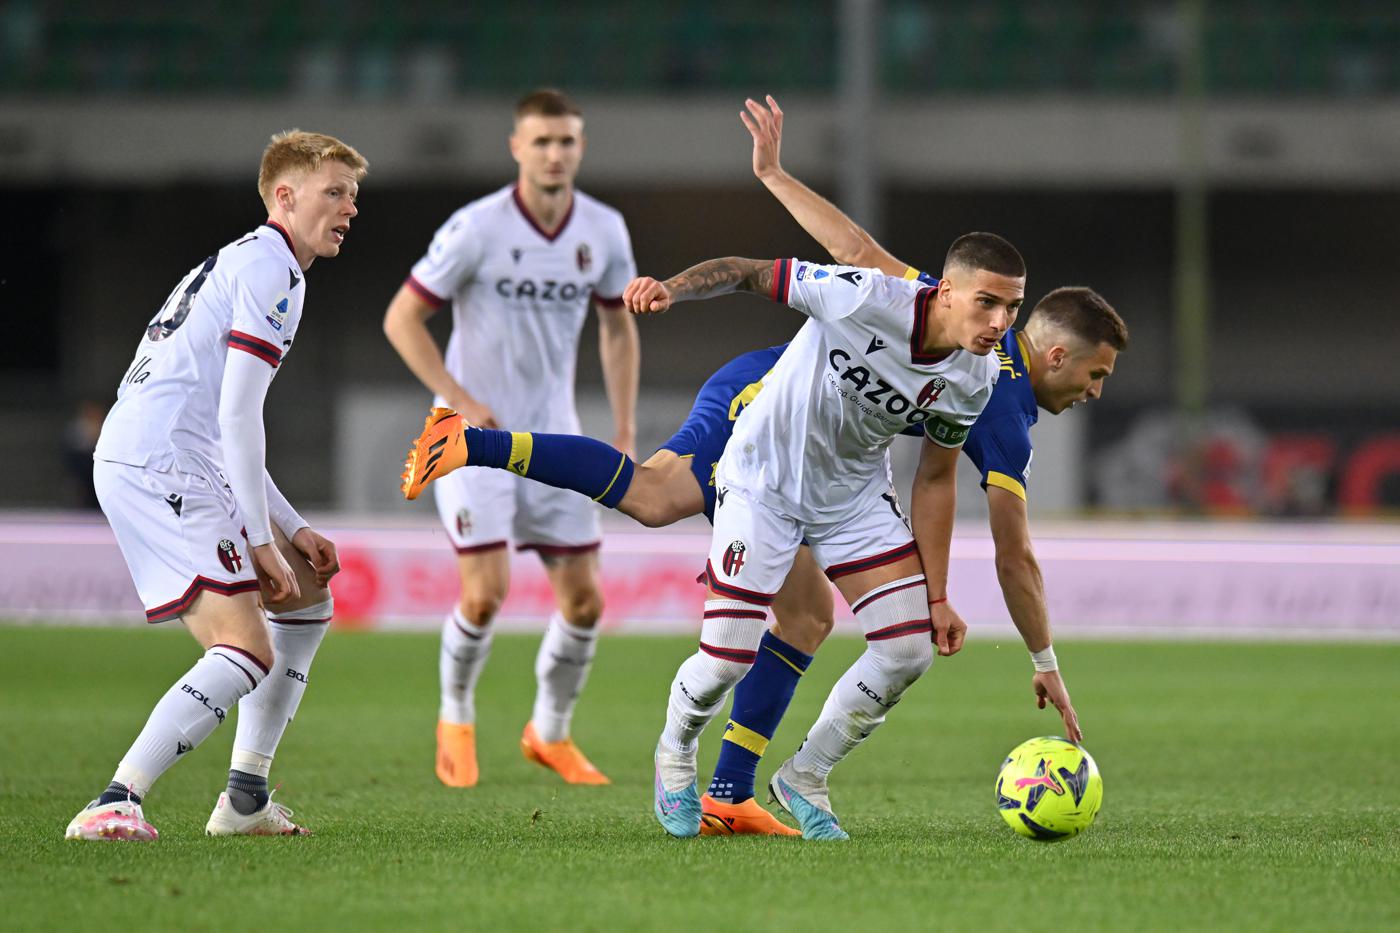 Verona vs Bologna - 2-1. Italian Championship, round of 31. Match Review, Statistics